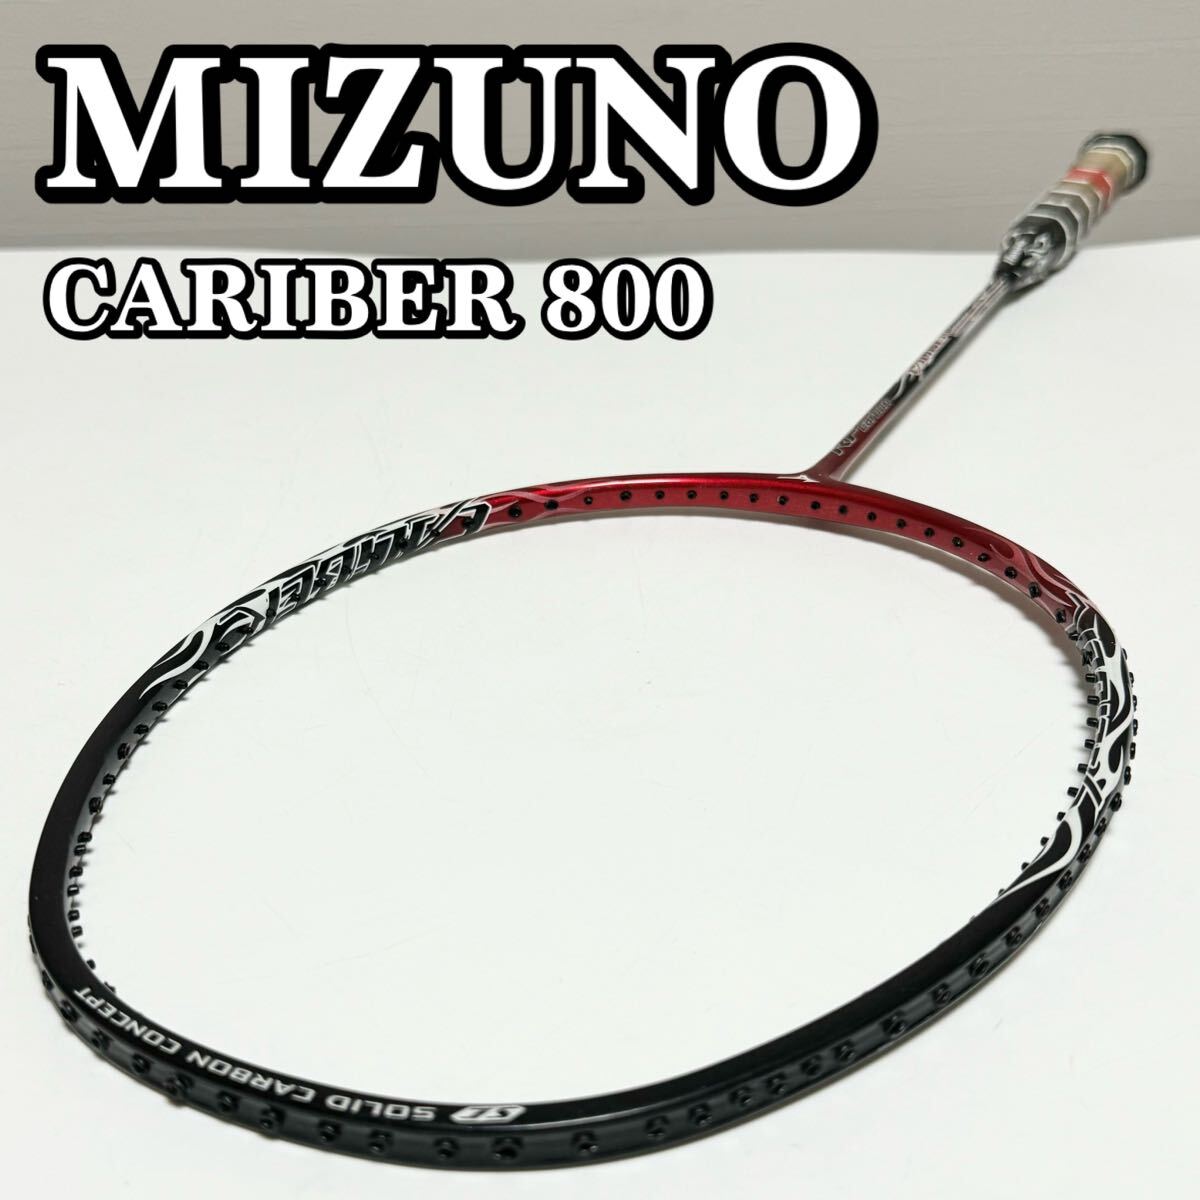 [ valuable ]MIZUNO Mizuno CARIBER800kyali bar 800 badminton racket 3UG5 3U5 valuable goods rare goods hard-to-find 